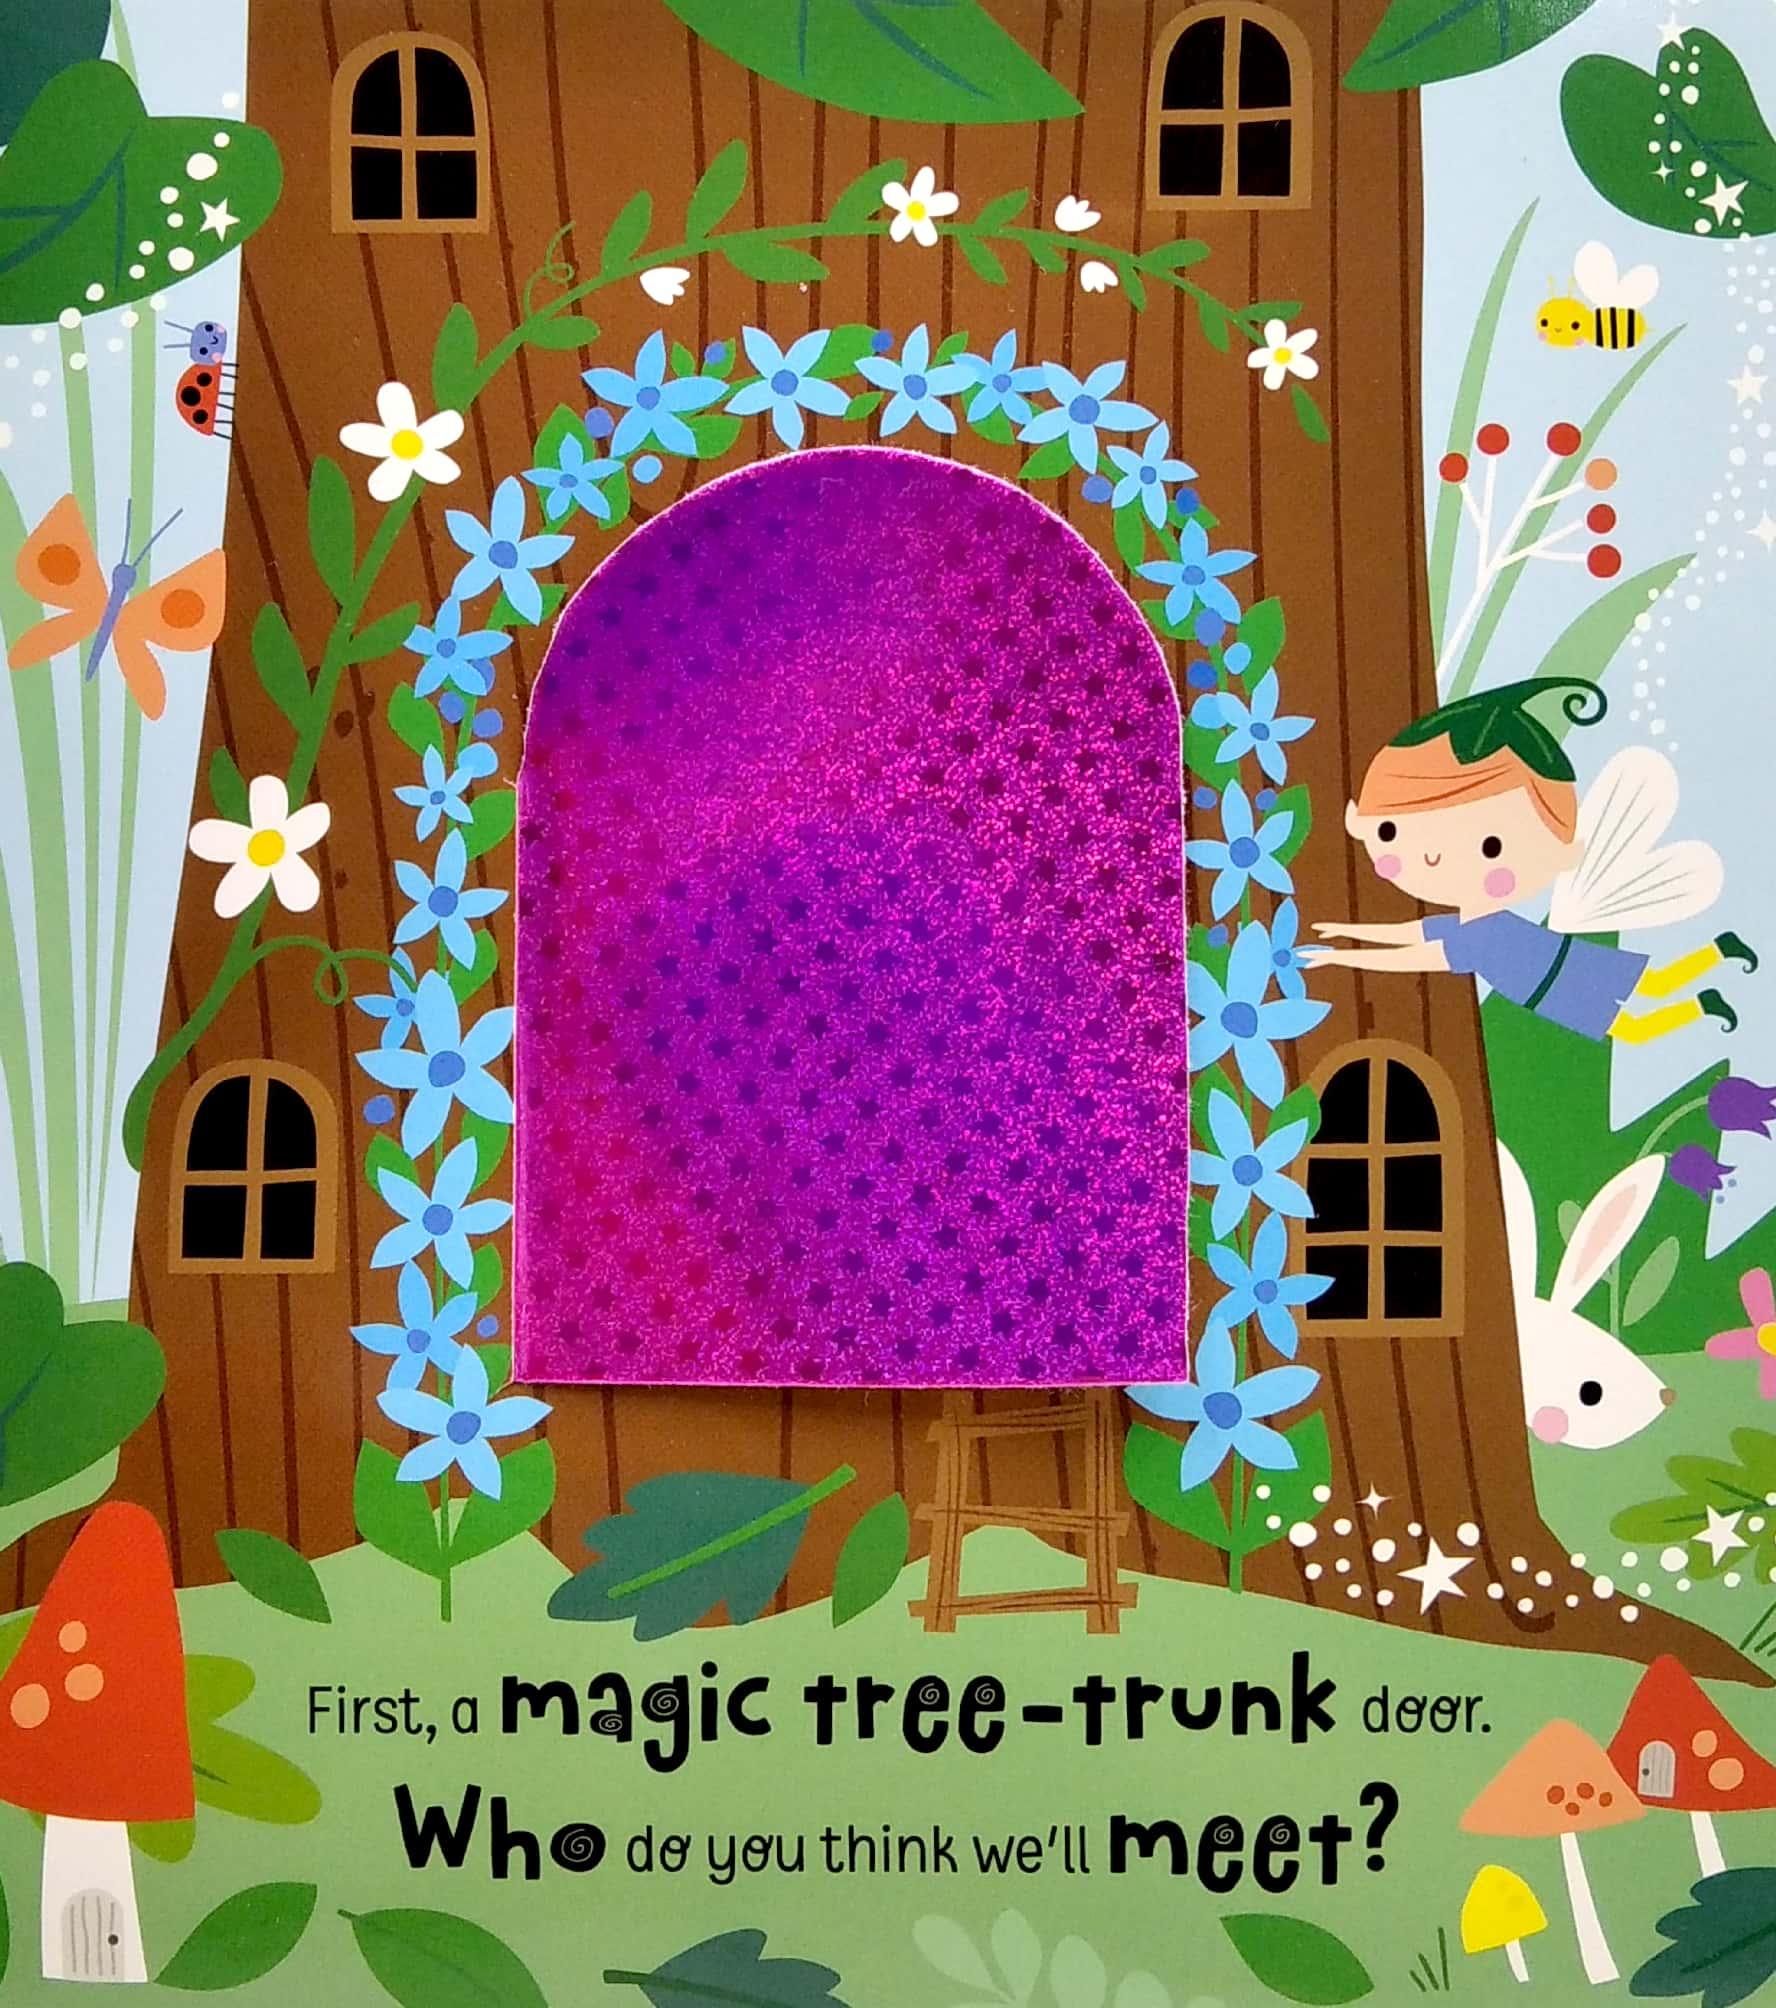 Secret Kingdom Fairy Doors